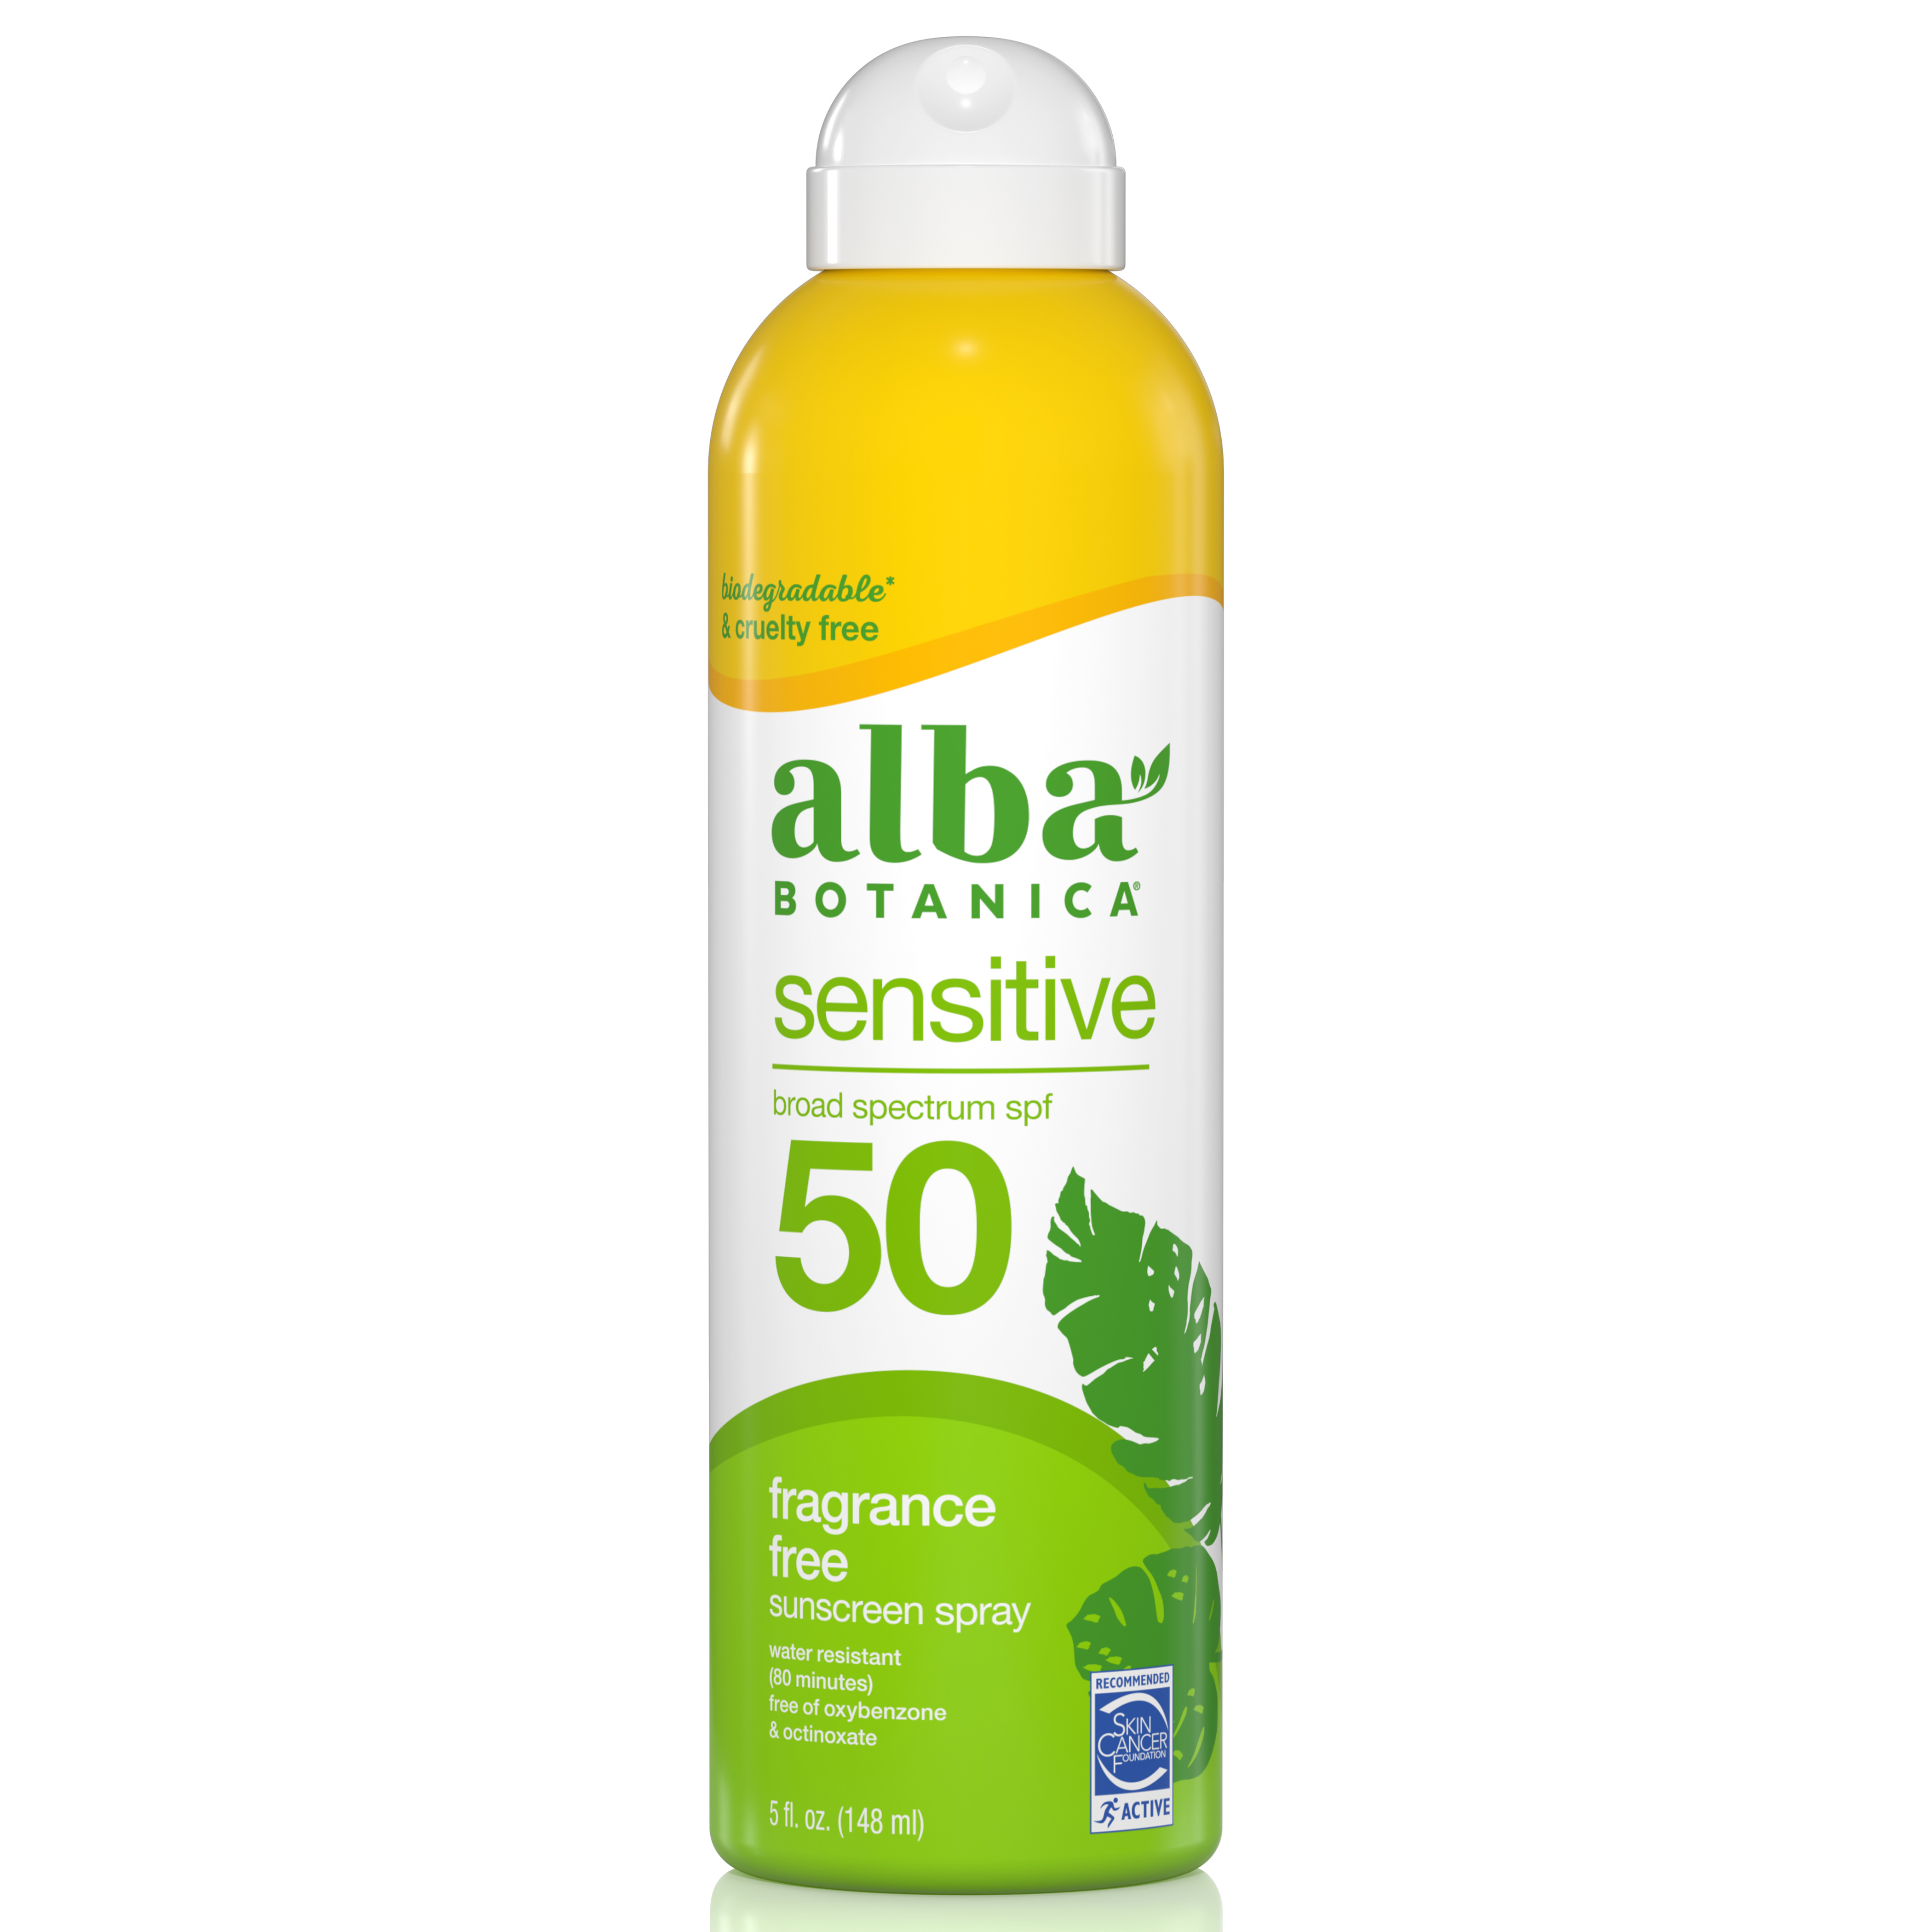 Alba Botanica Sensitive Sunscreen Spray SPF 50, Fragrance Free, 5 fl oz - image 1 of 11